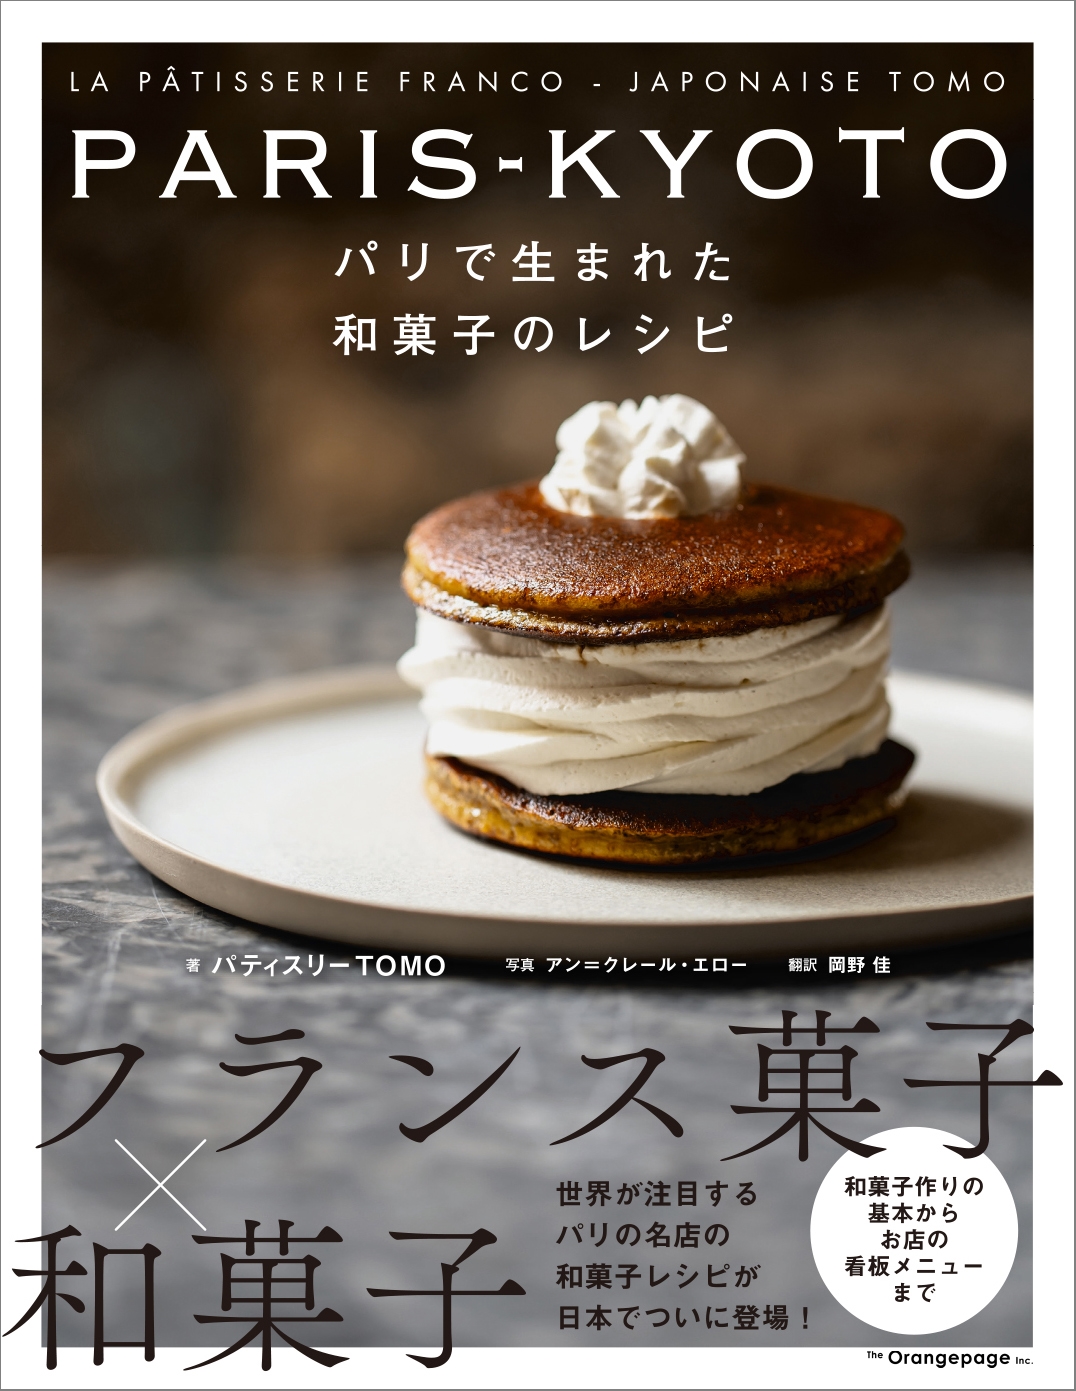 Tomo/PARIS-KYOTO パリで生まれた和菓子のレシピ